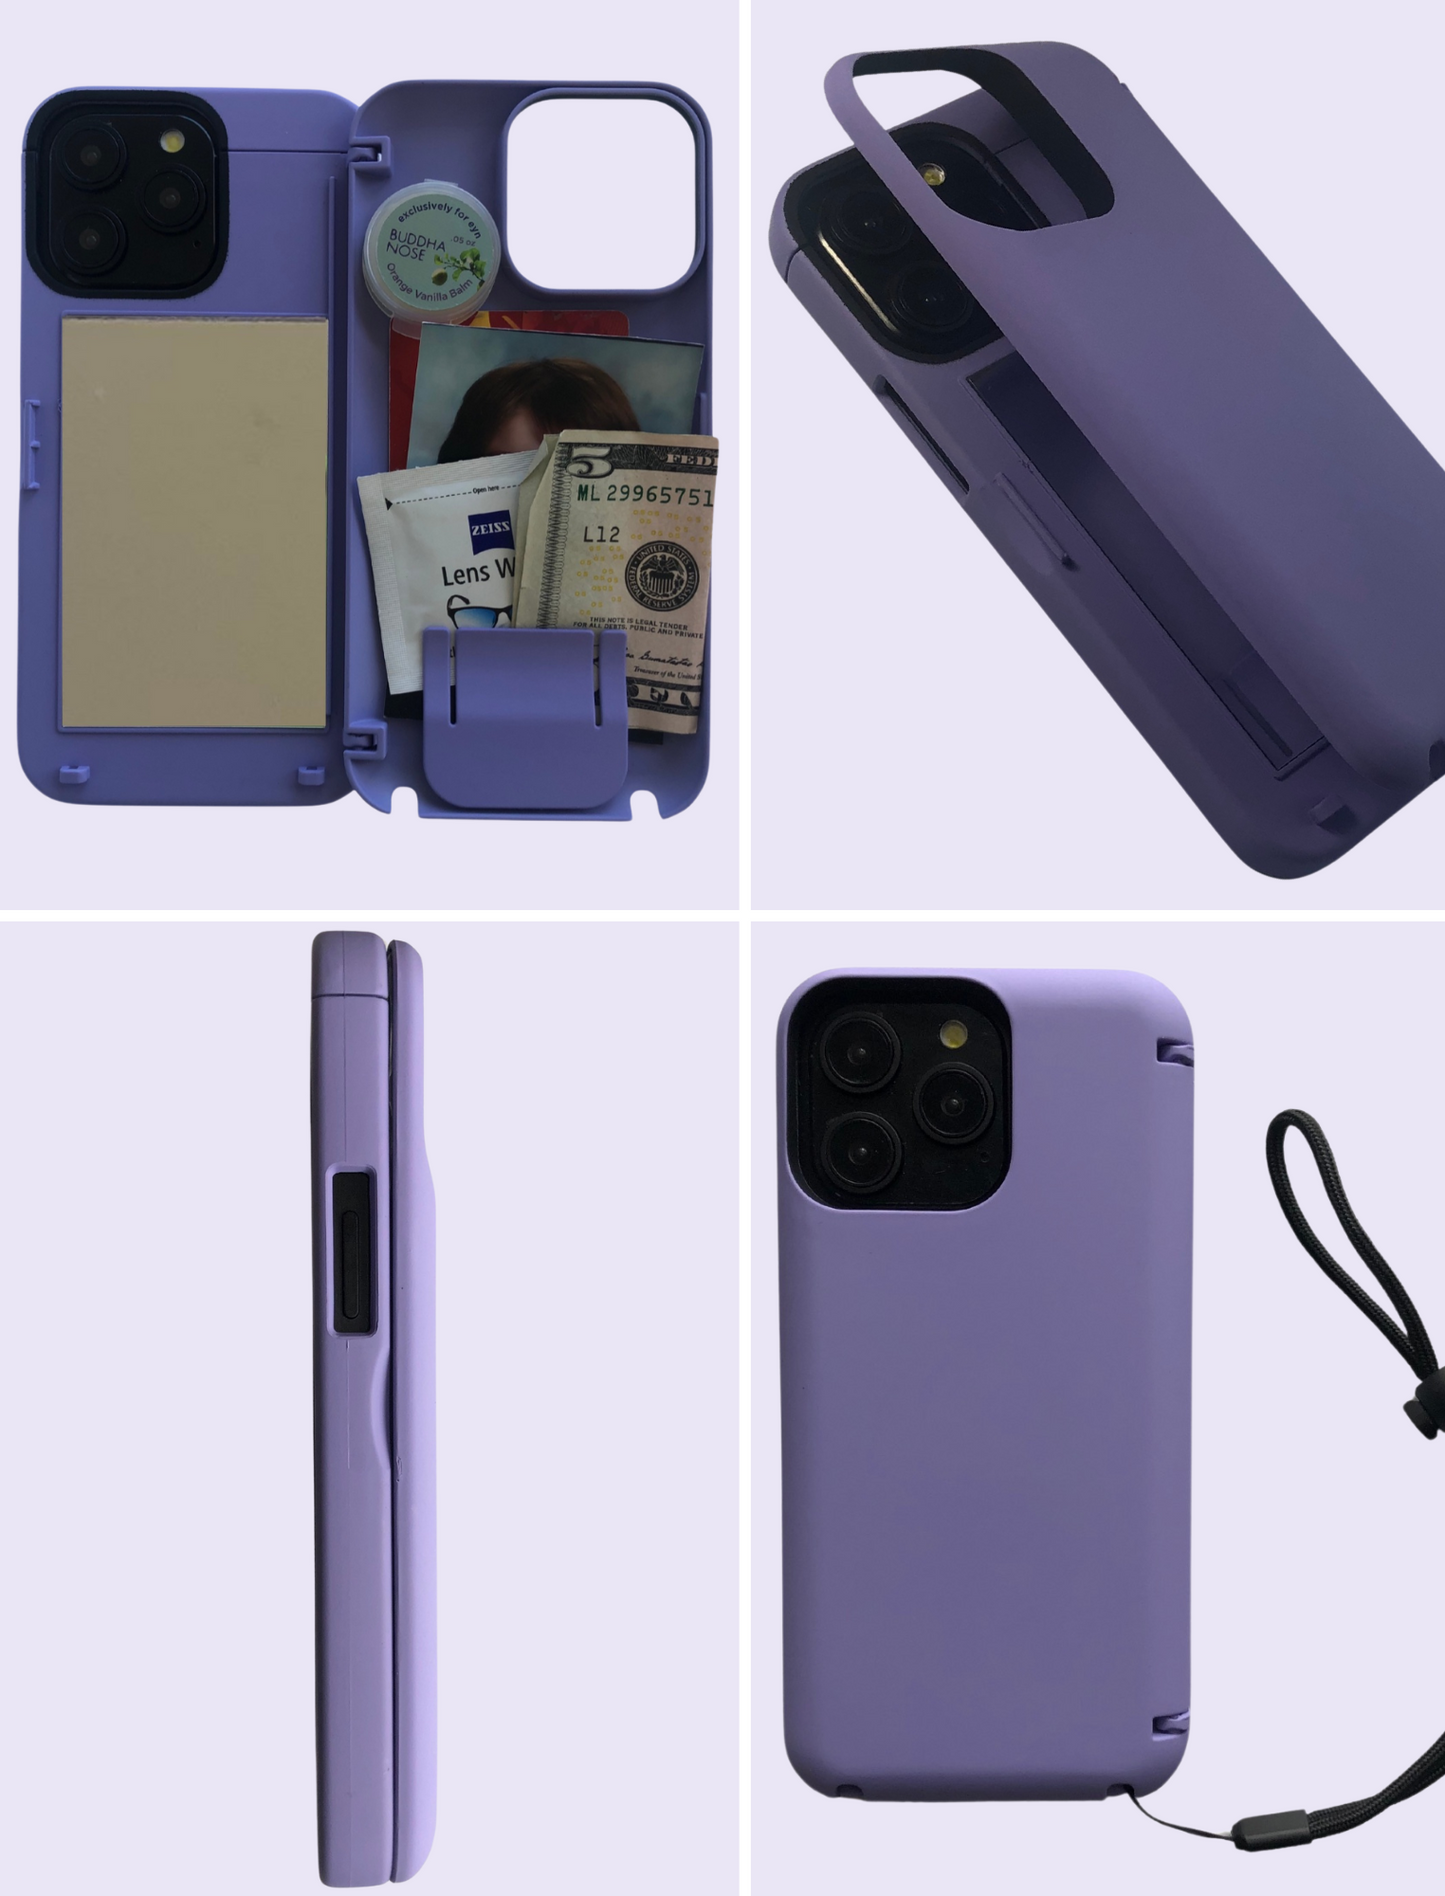 iPhone 12 Pro Max wallet / storage phone case